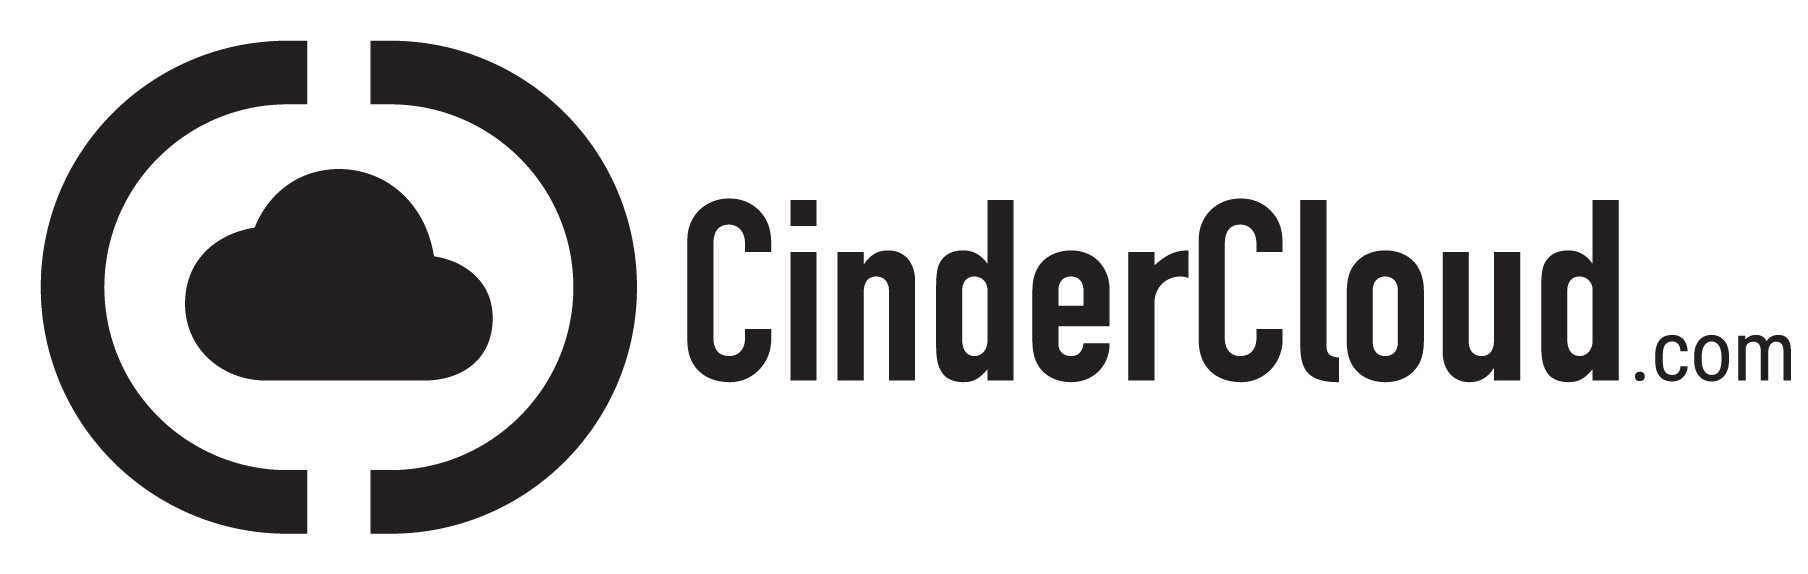 CinderCloud - About